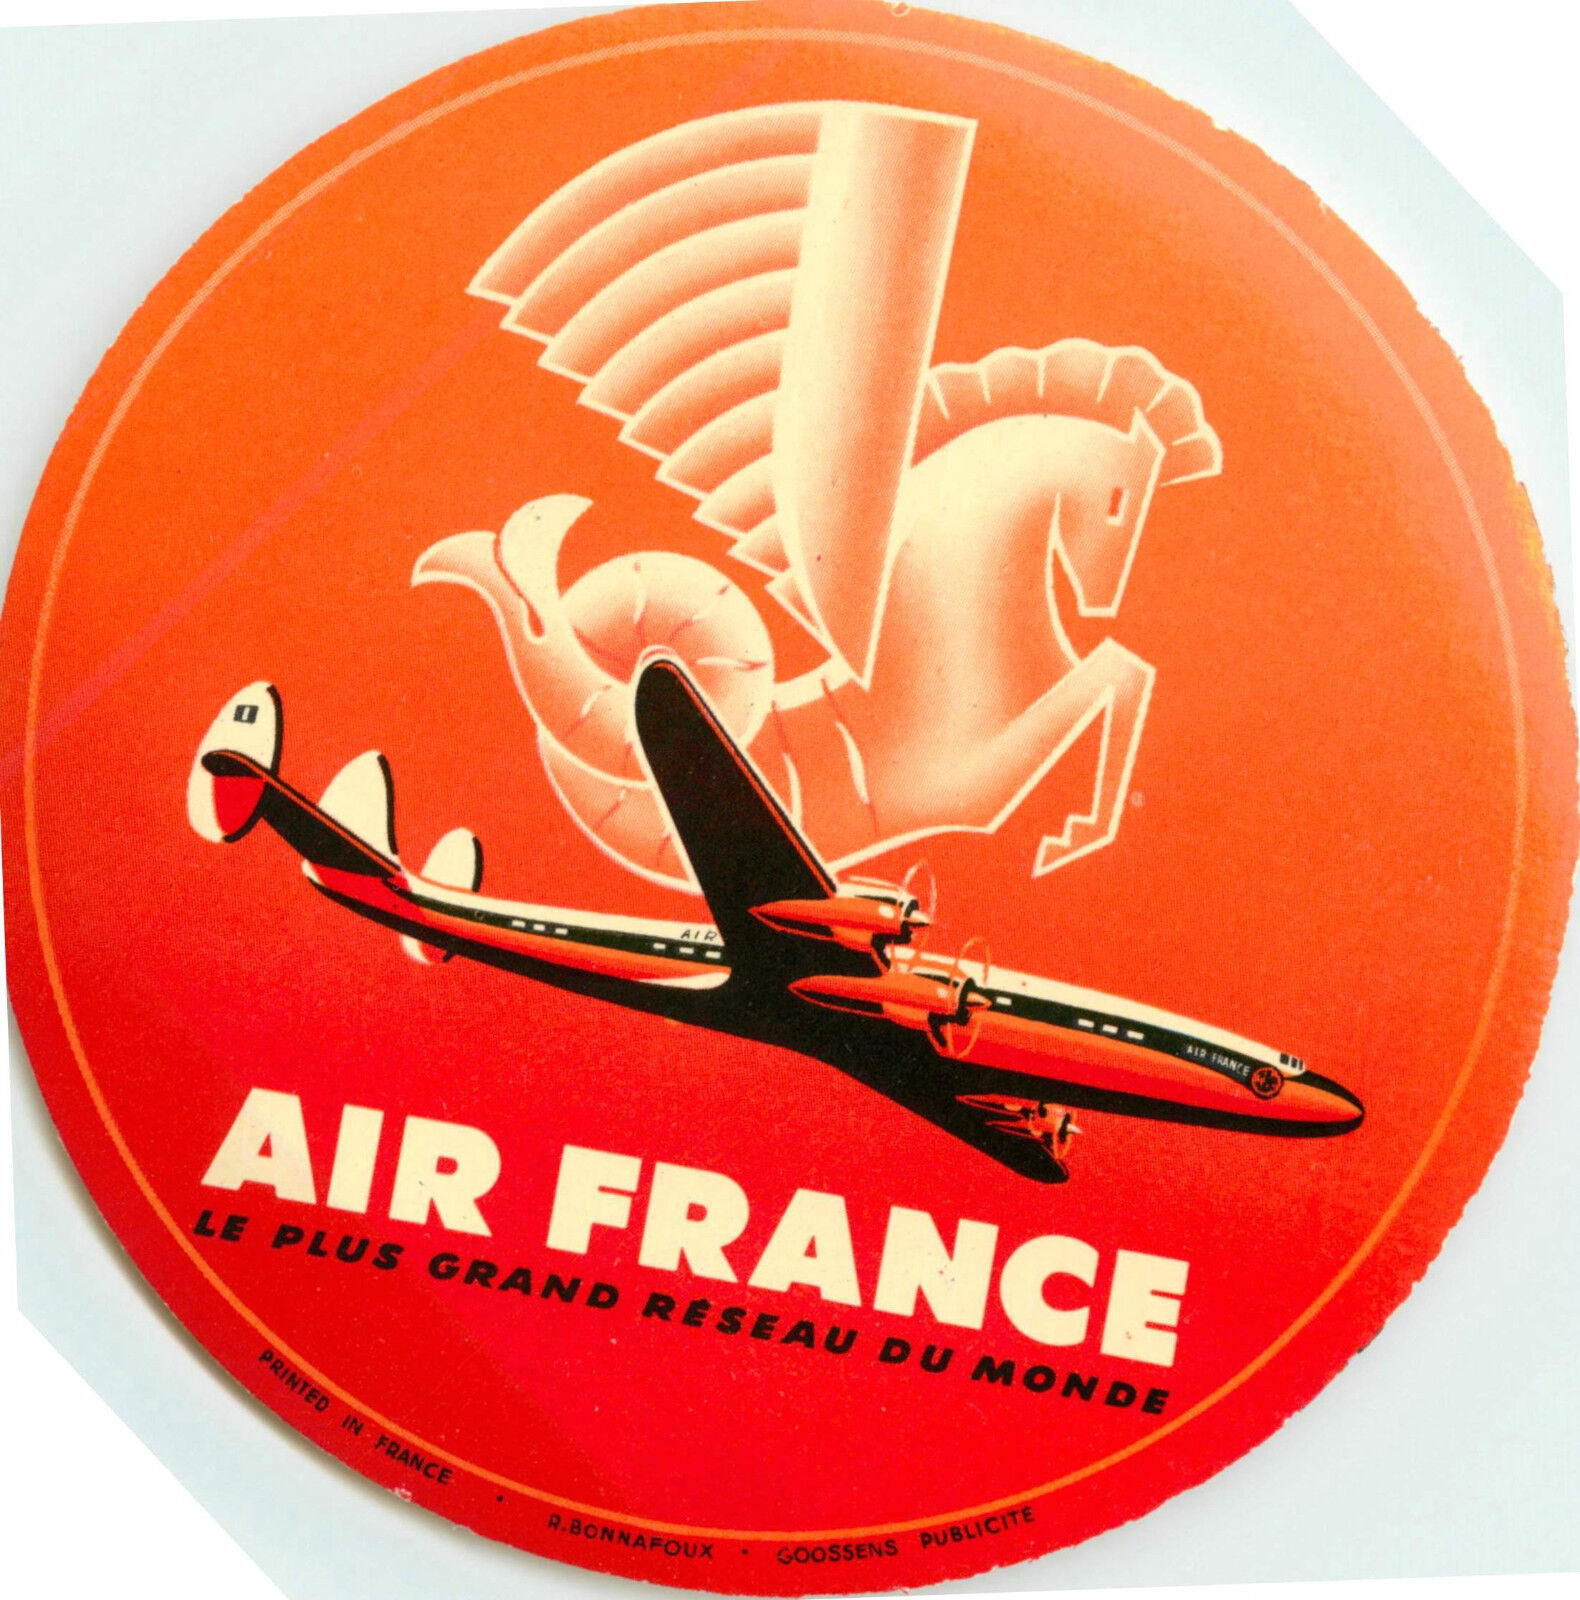 AIR FRANCE - Vibrant Old Airline Luggage Label, c. 1955      (Orange Version)